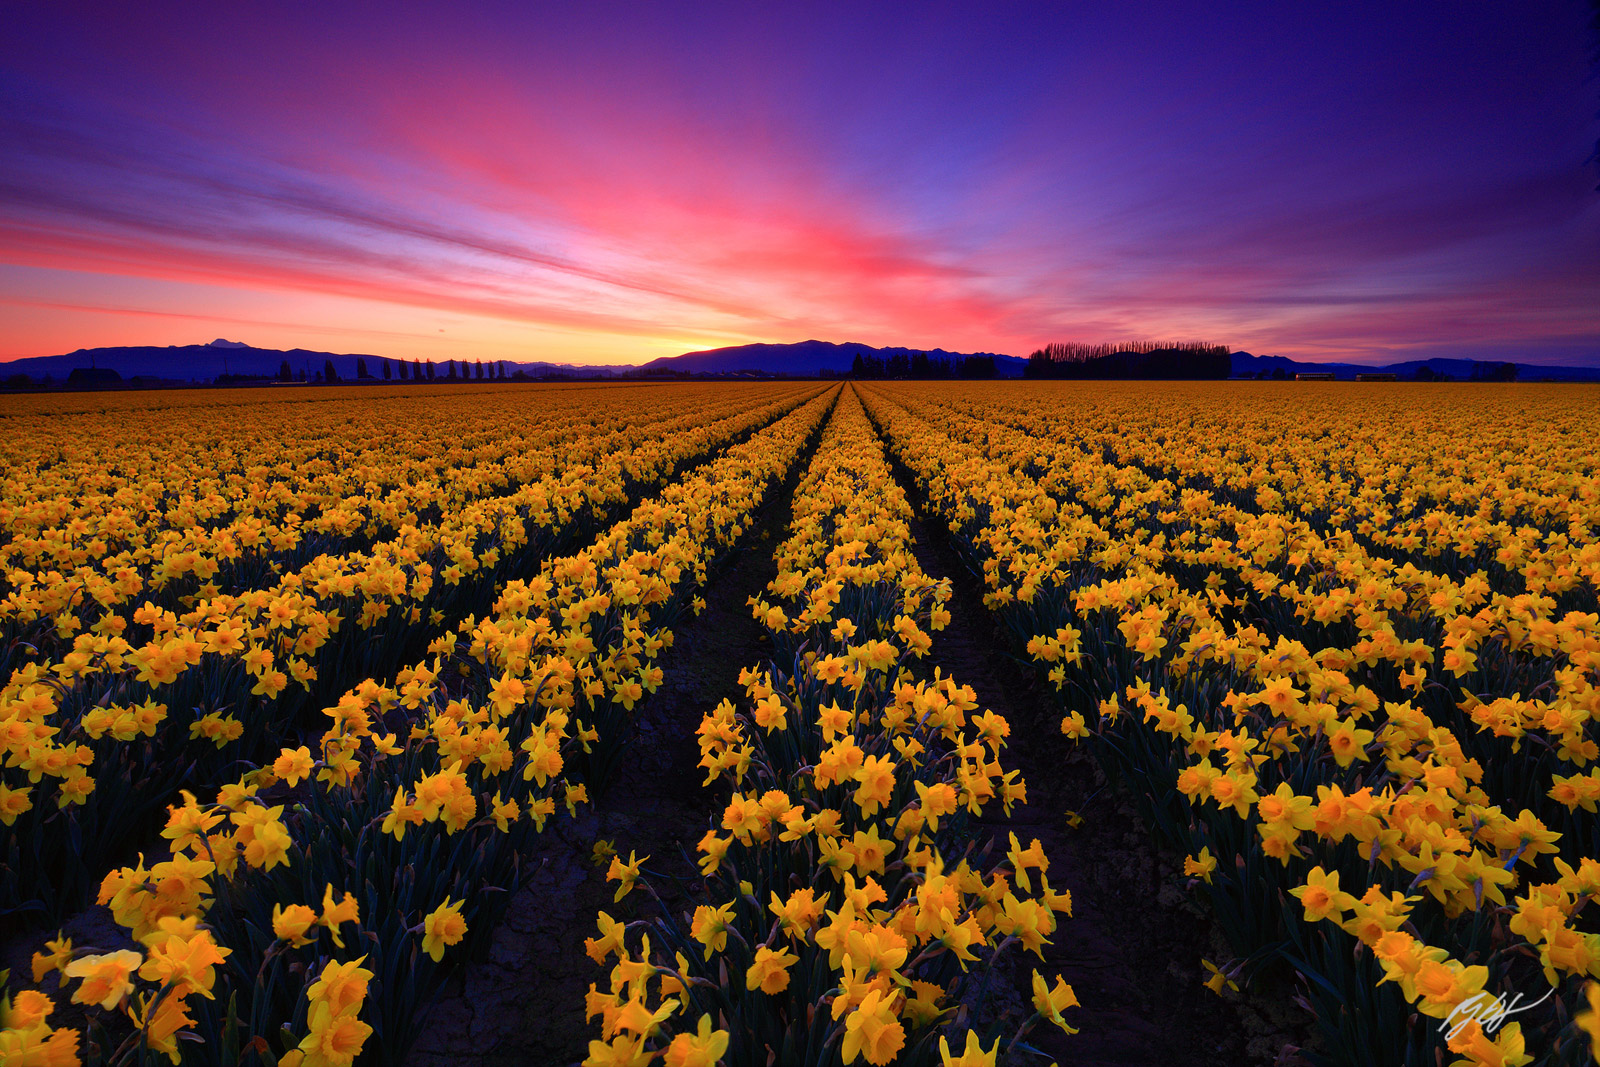 Sunrise in the Daffodil Fields in Skagit Valley in Washington